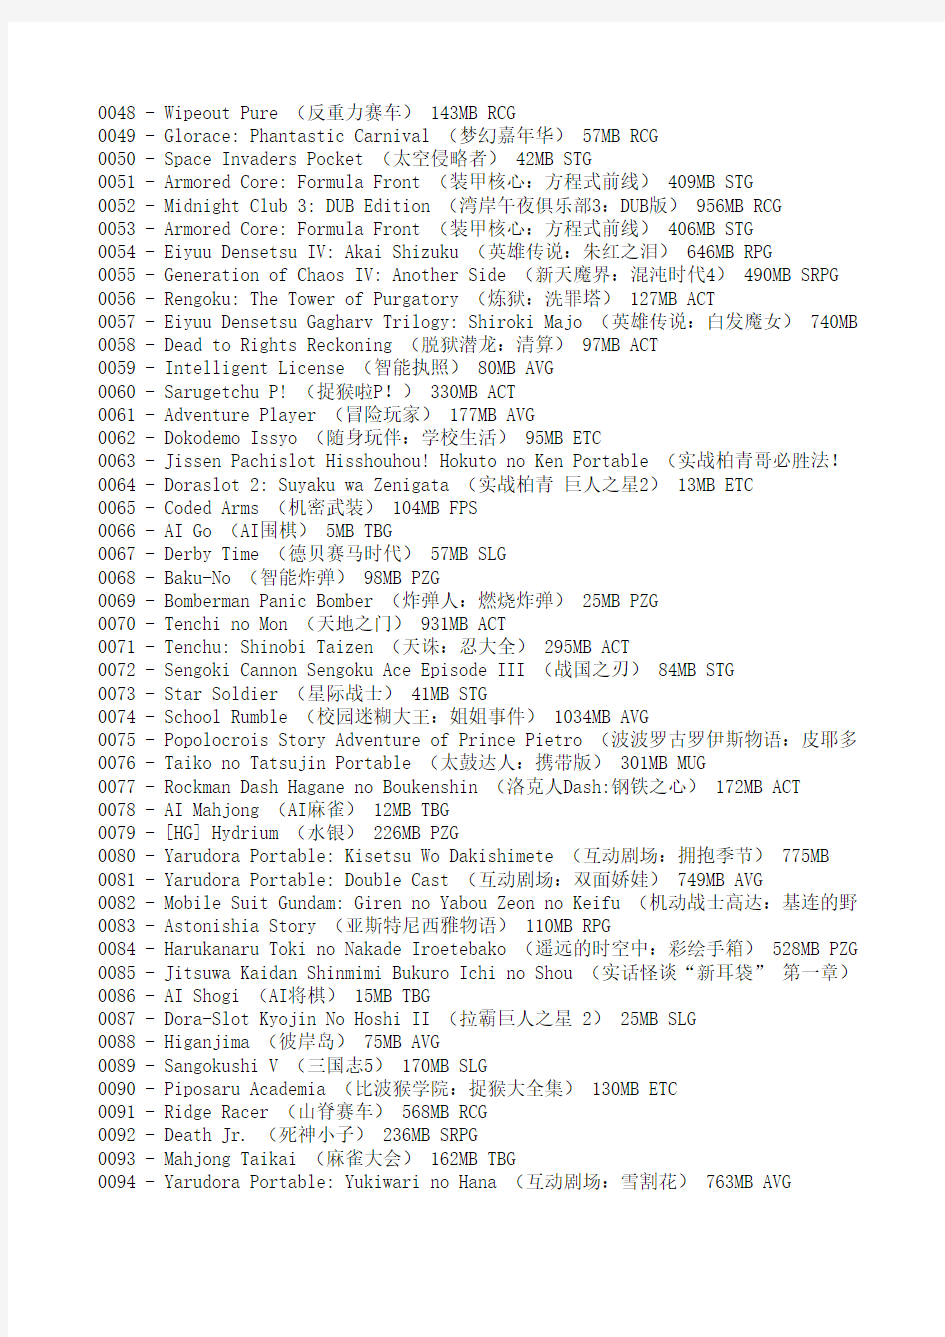 PSP 游戏列表(0001-1753)